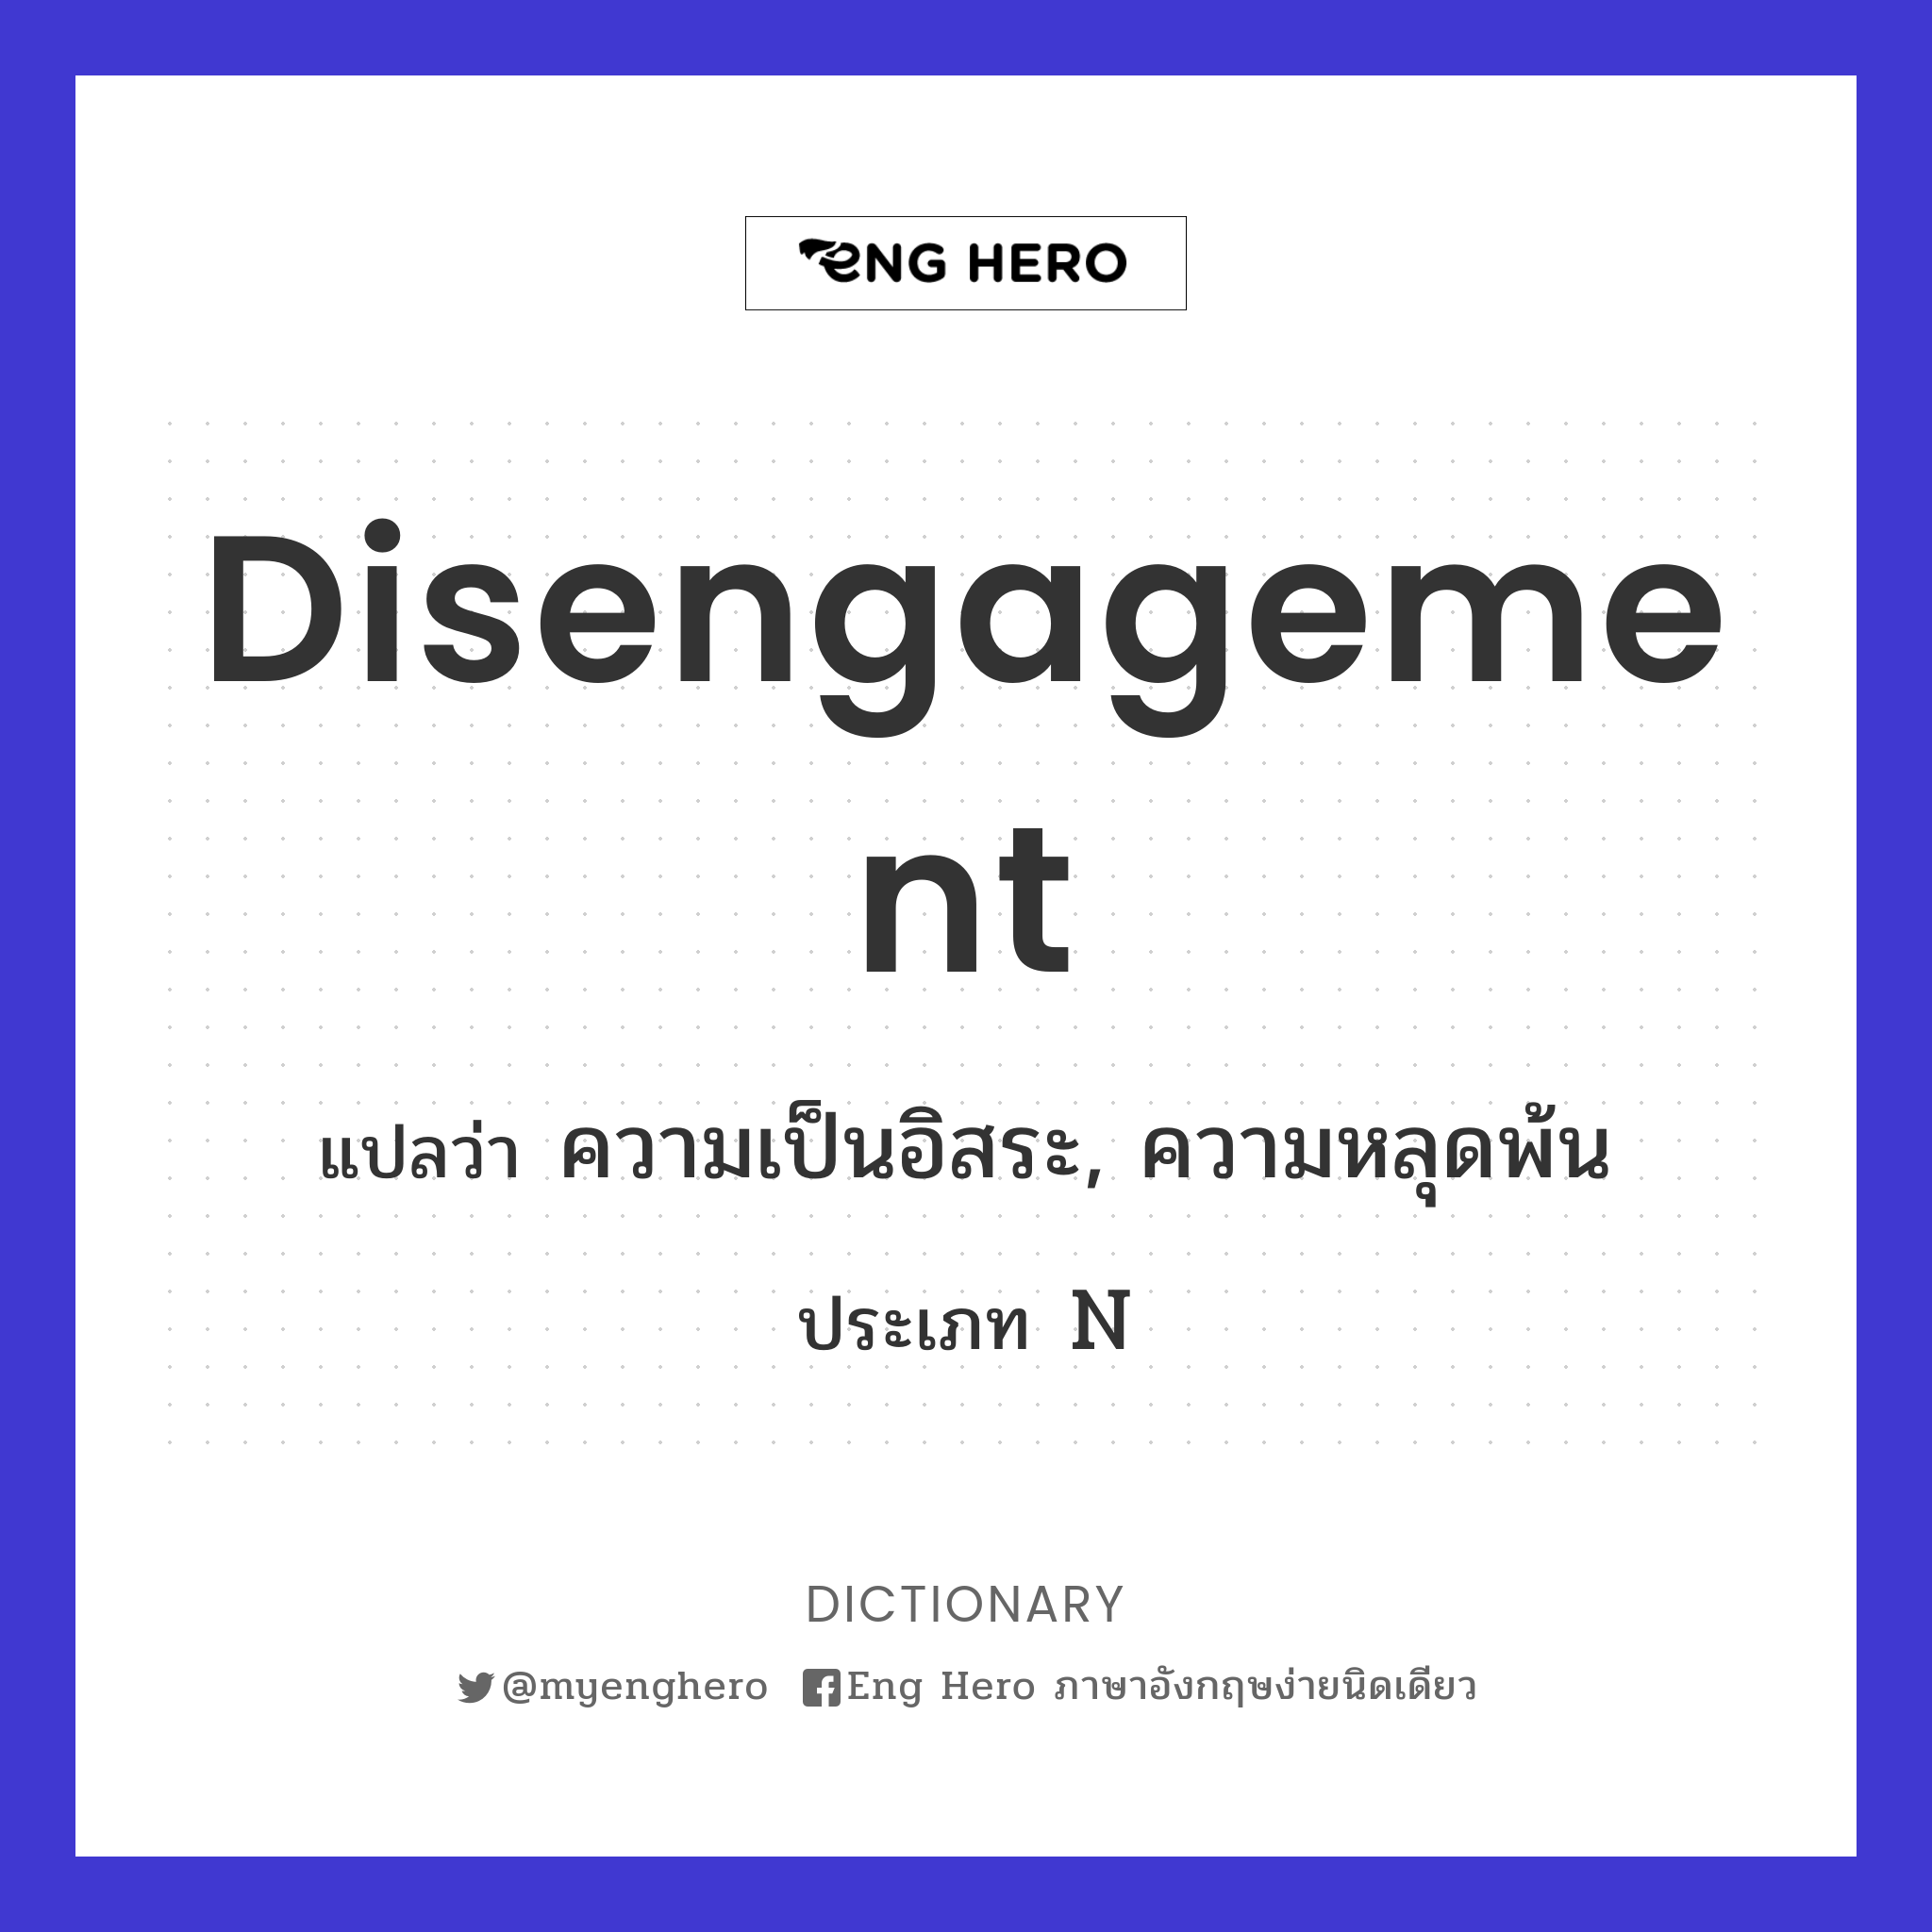 disengagement